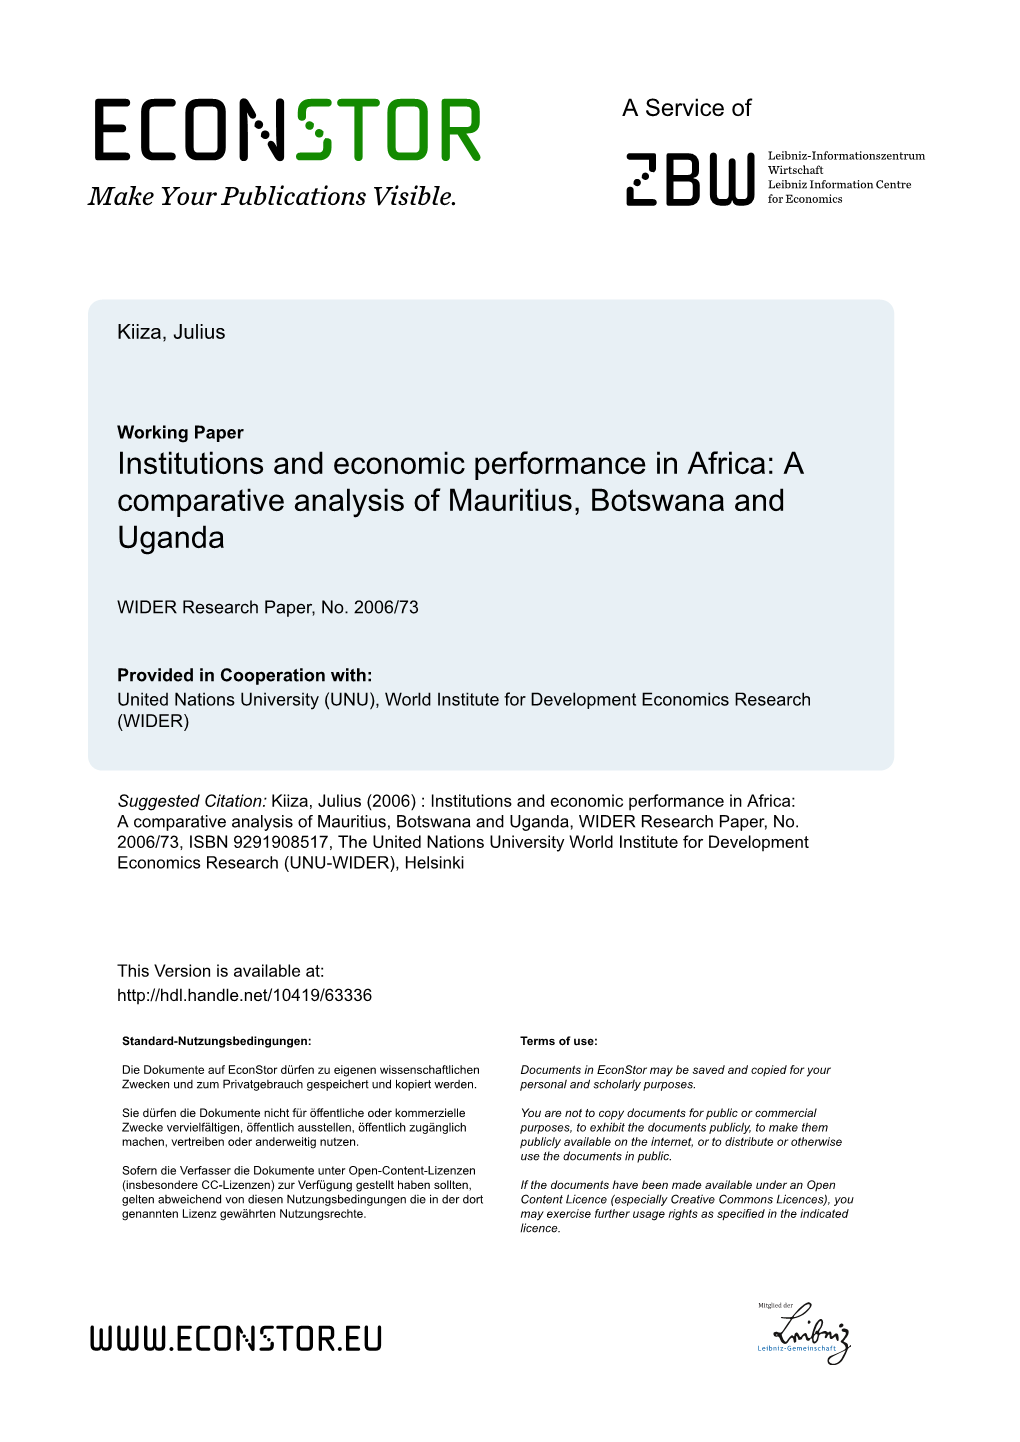 A Comparative Analysis of Mauritius, Botswana and Uganda